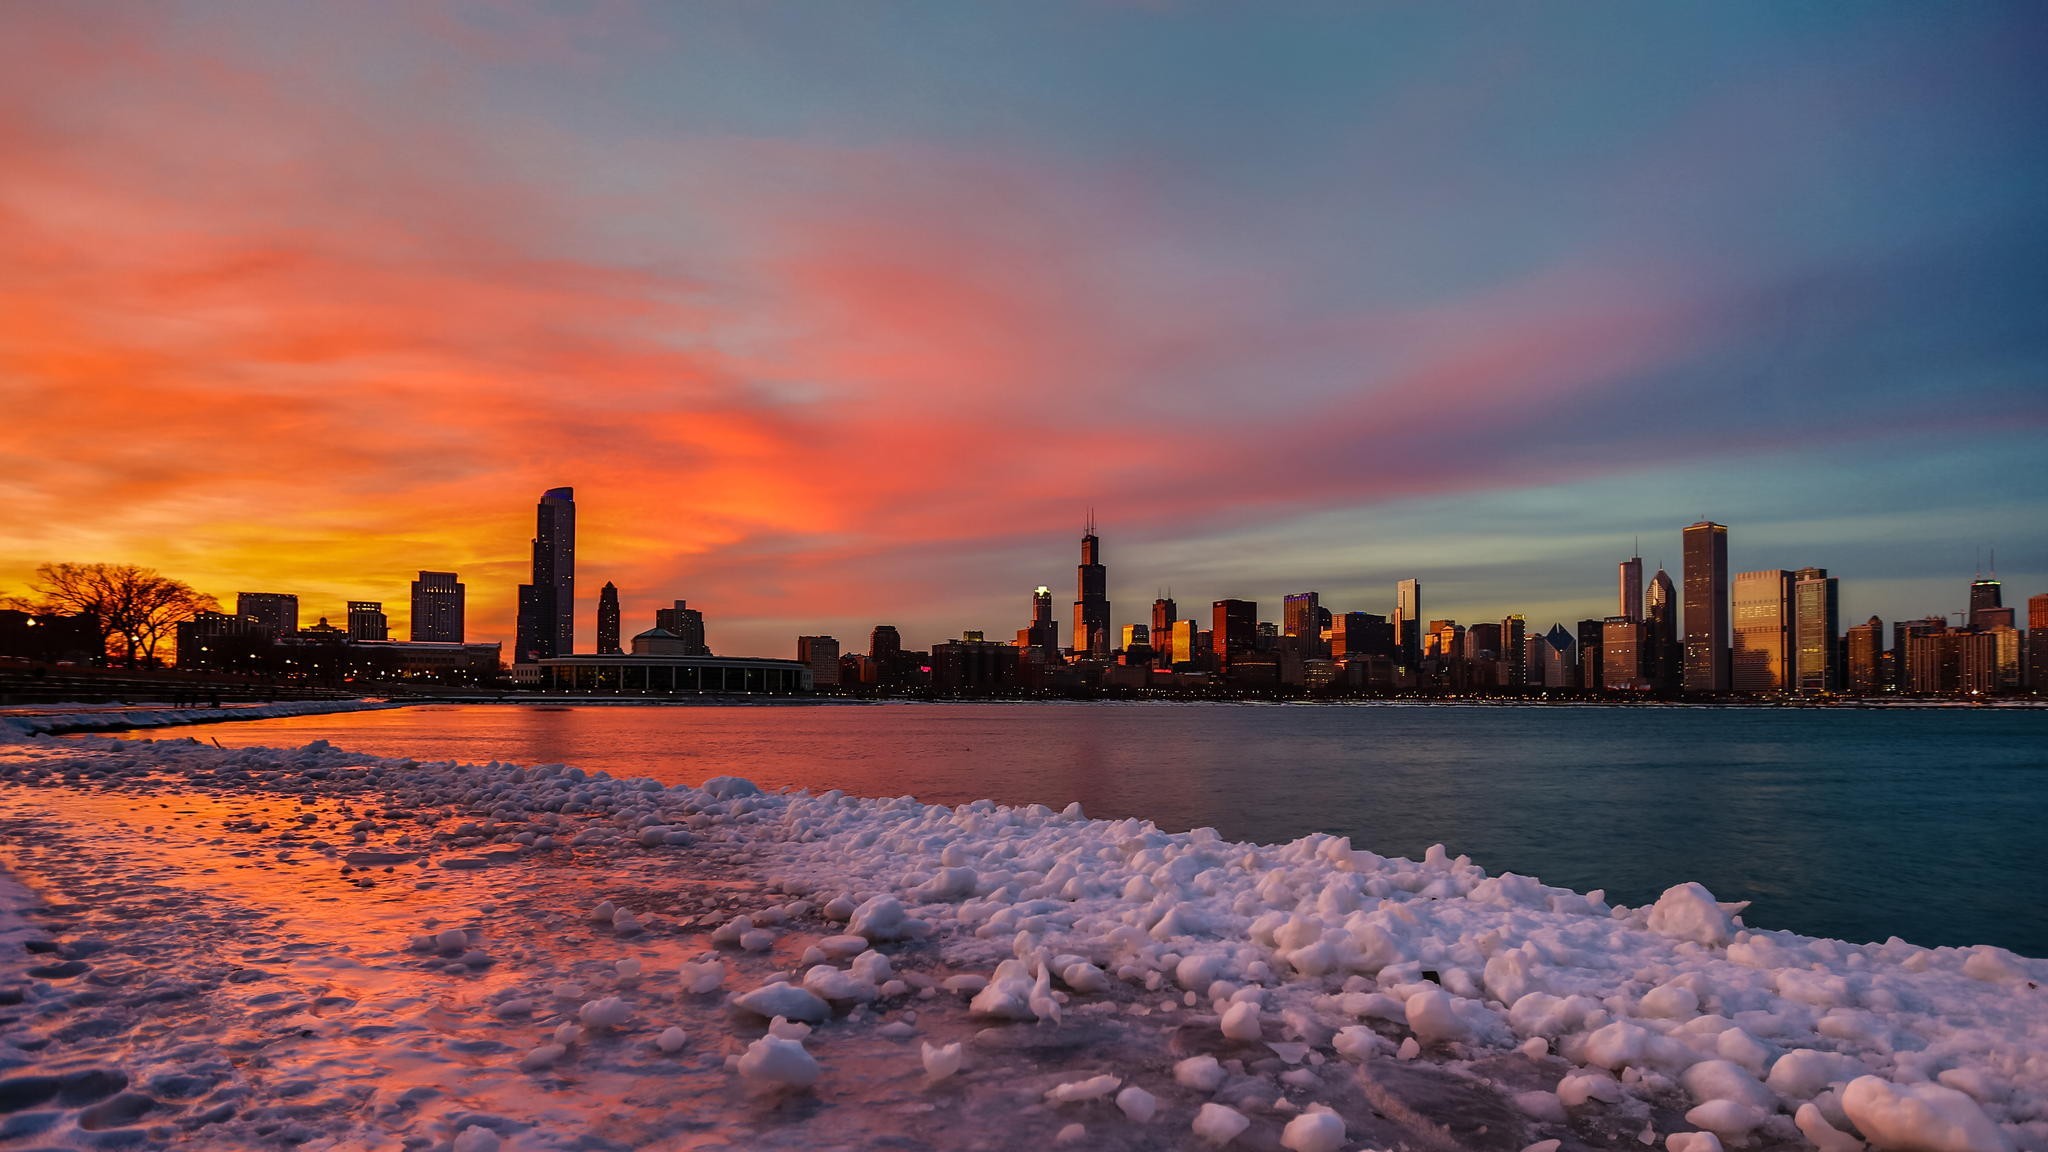 General 2048x1152 city cityscape sunset orange sky Chicago skyscraper sky cold winter ice sunlight